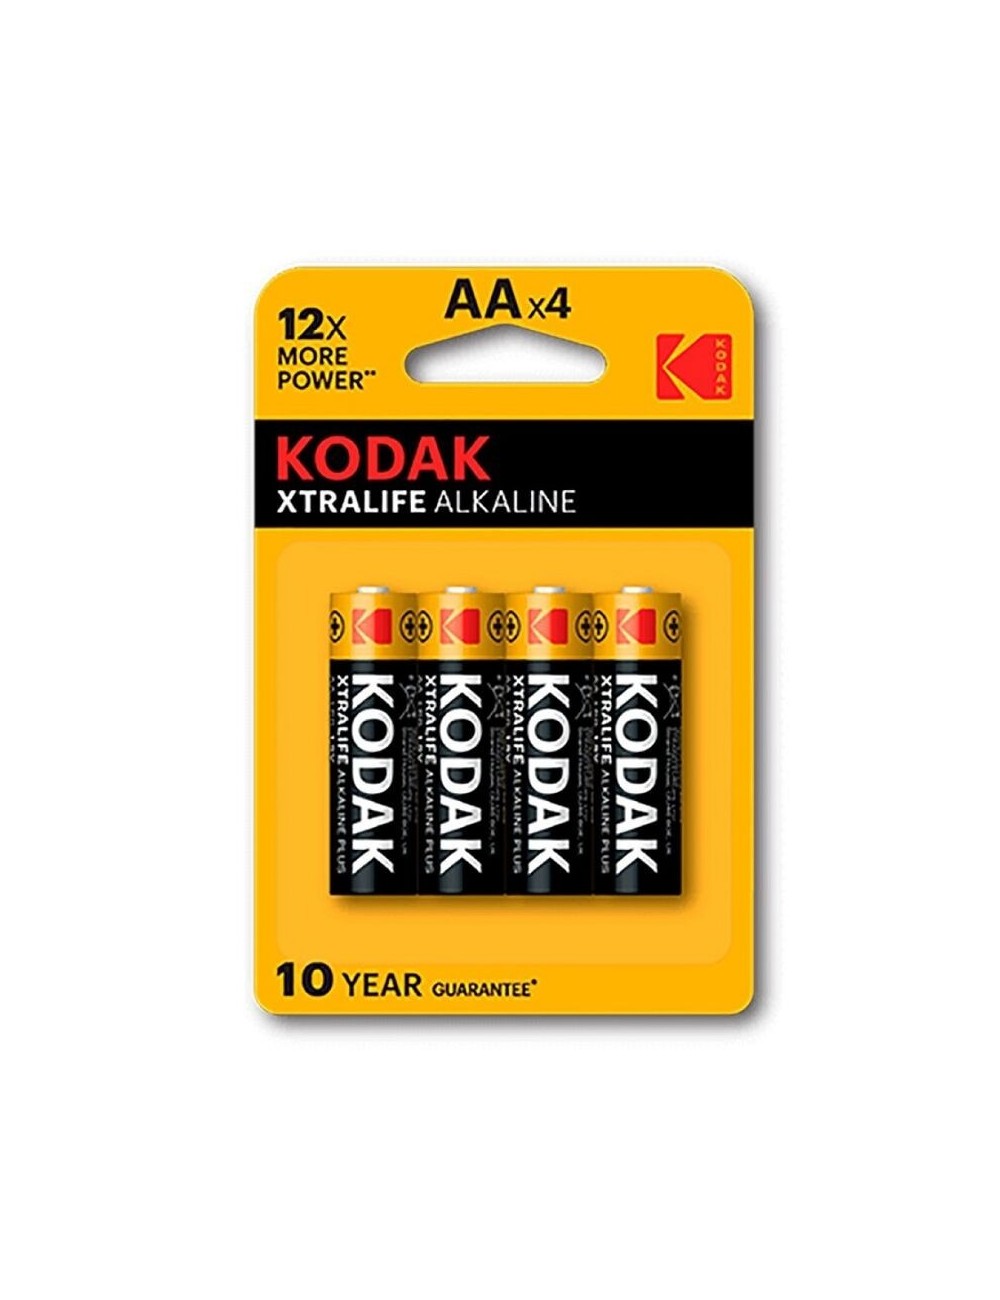 Sextoys - Accessoires - PILE ALCALINE KODAK XTRALIFE AA LR6 * 4 - Kodak